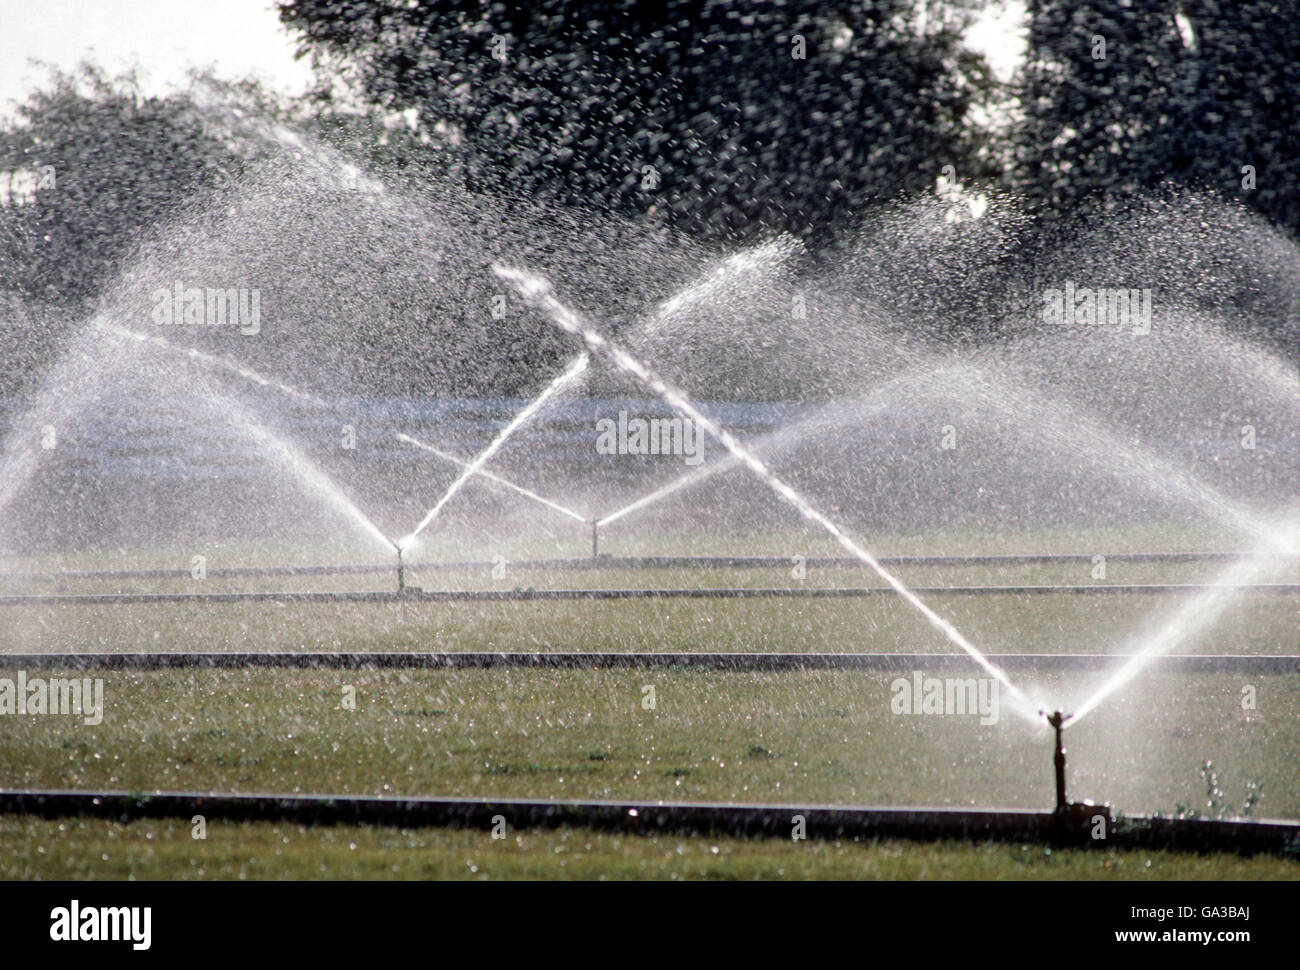 Sprinkler commerciale irrigando turf grass Foto Stock